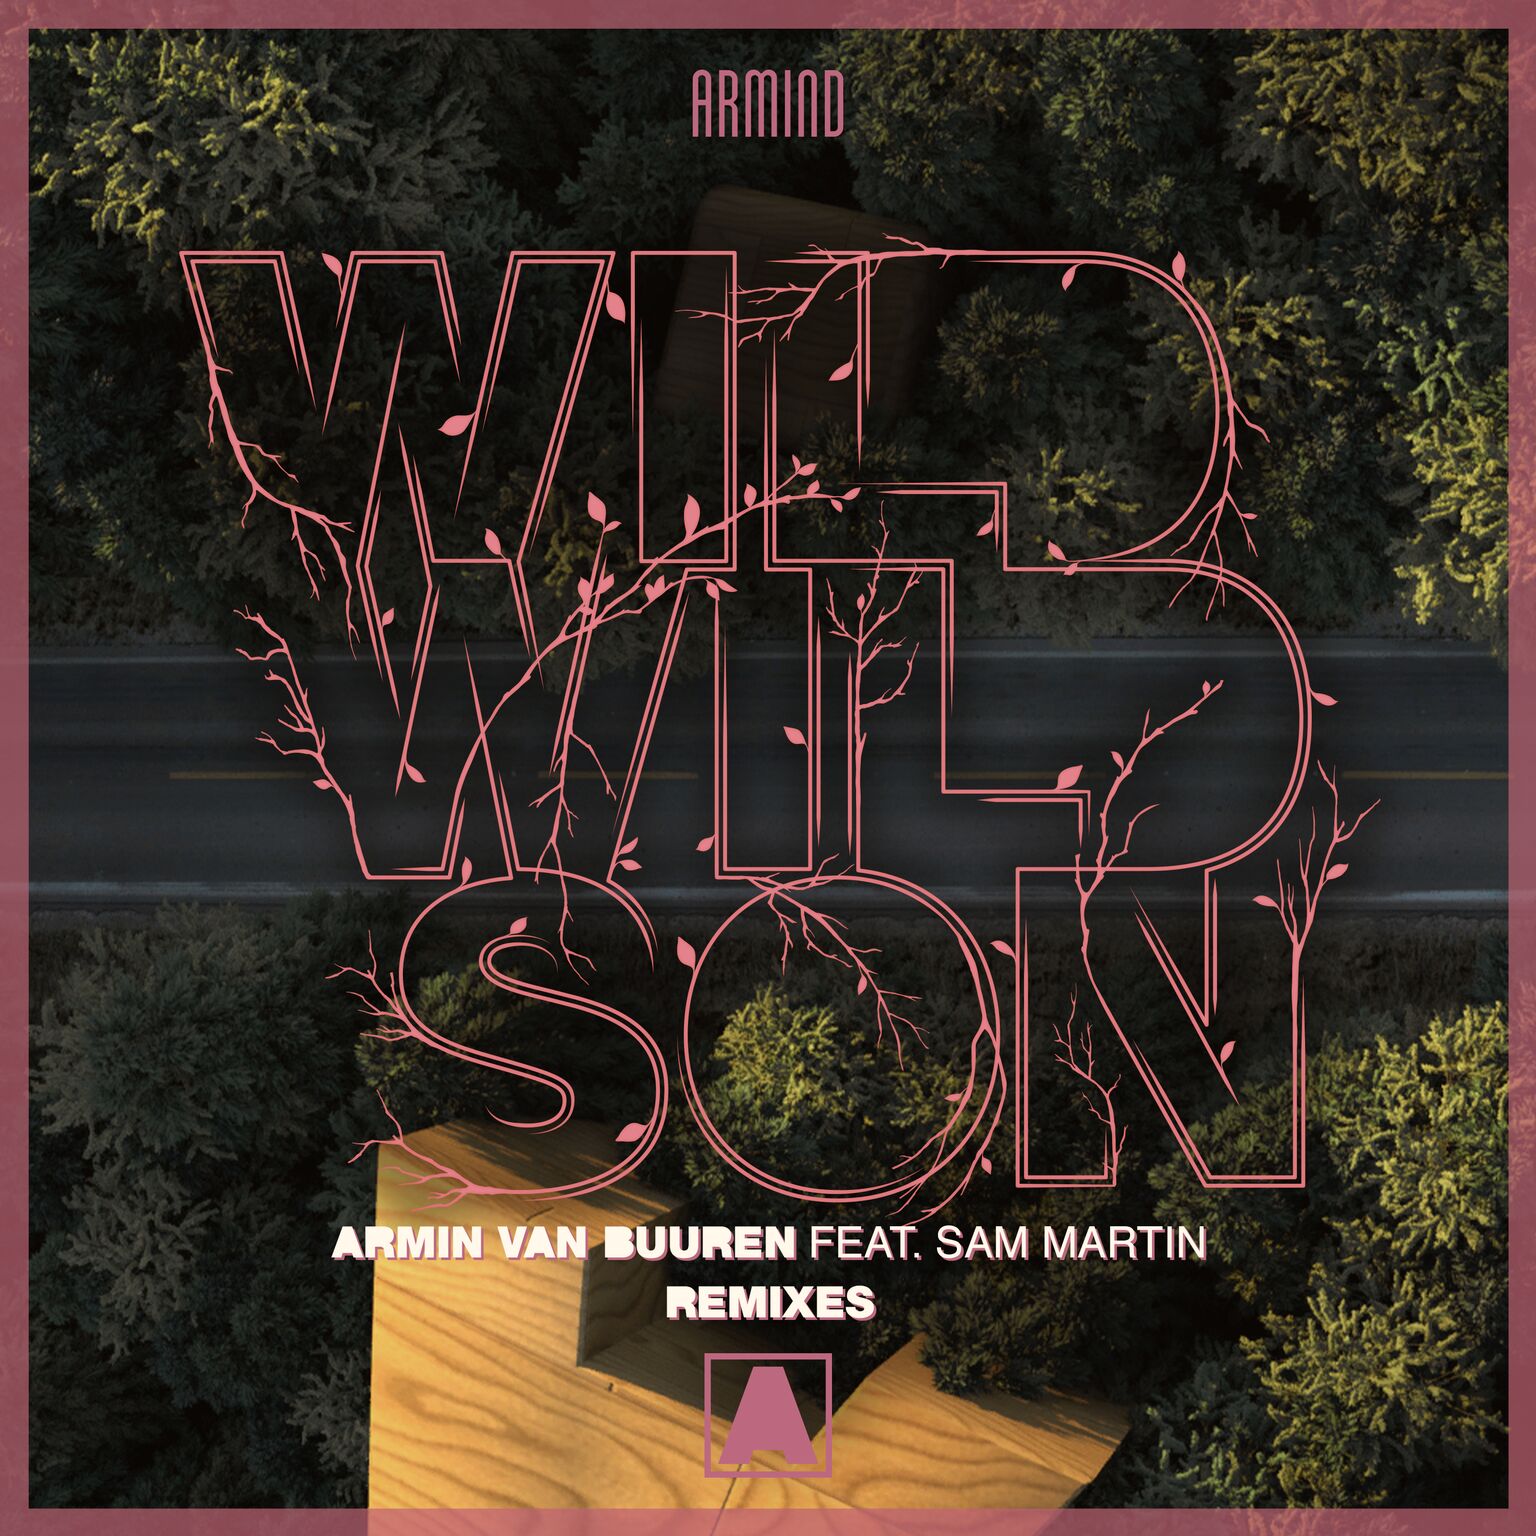 Armin van Buuren feat. Sam Martin presents Wild Wild Son (Remixes) on Armind